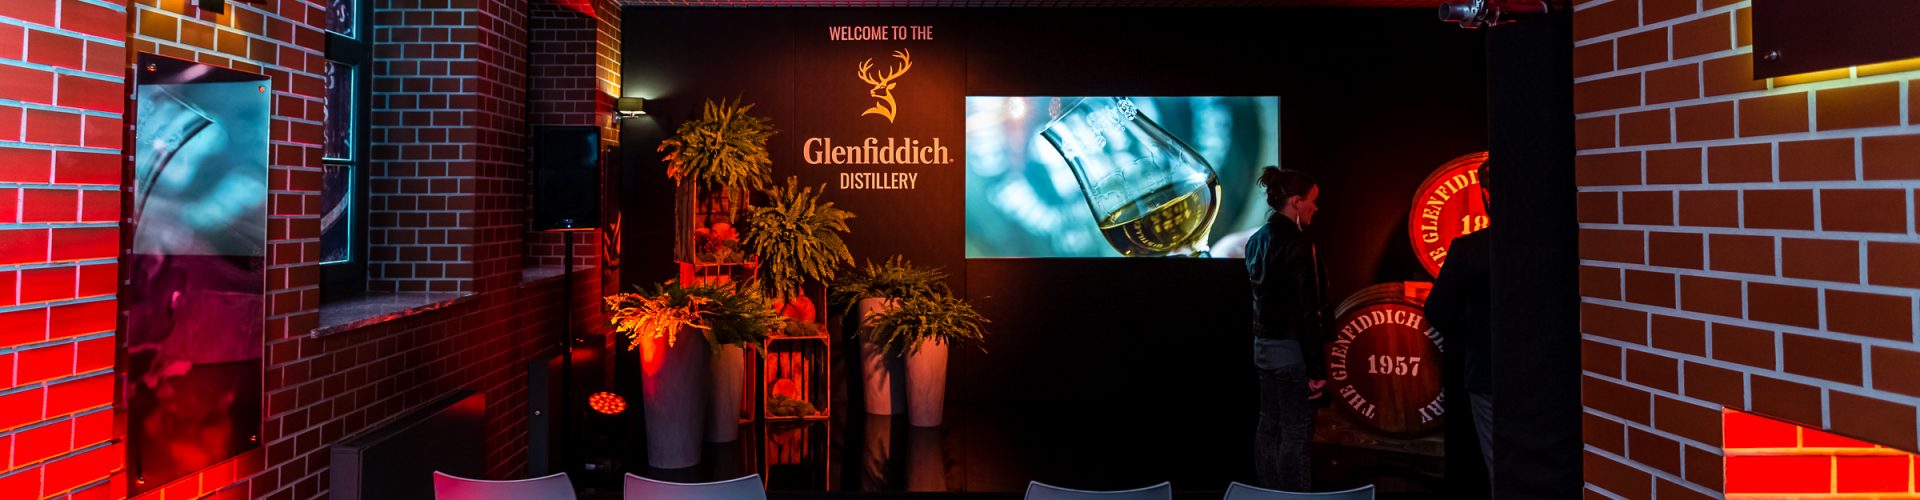 2017-whiskybar88-glenfiddish-50-male-logo-4